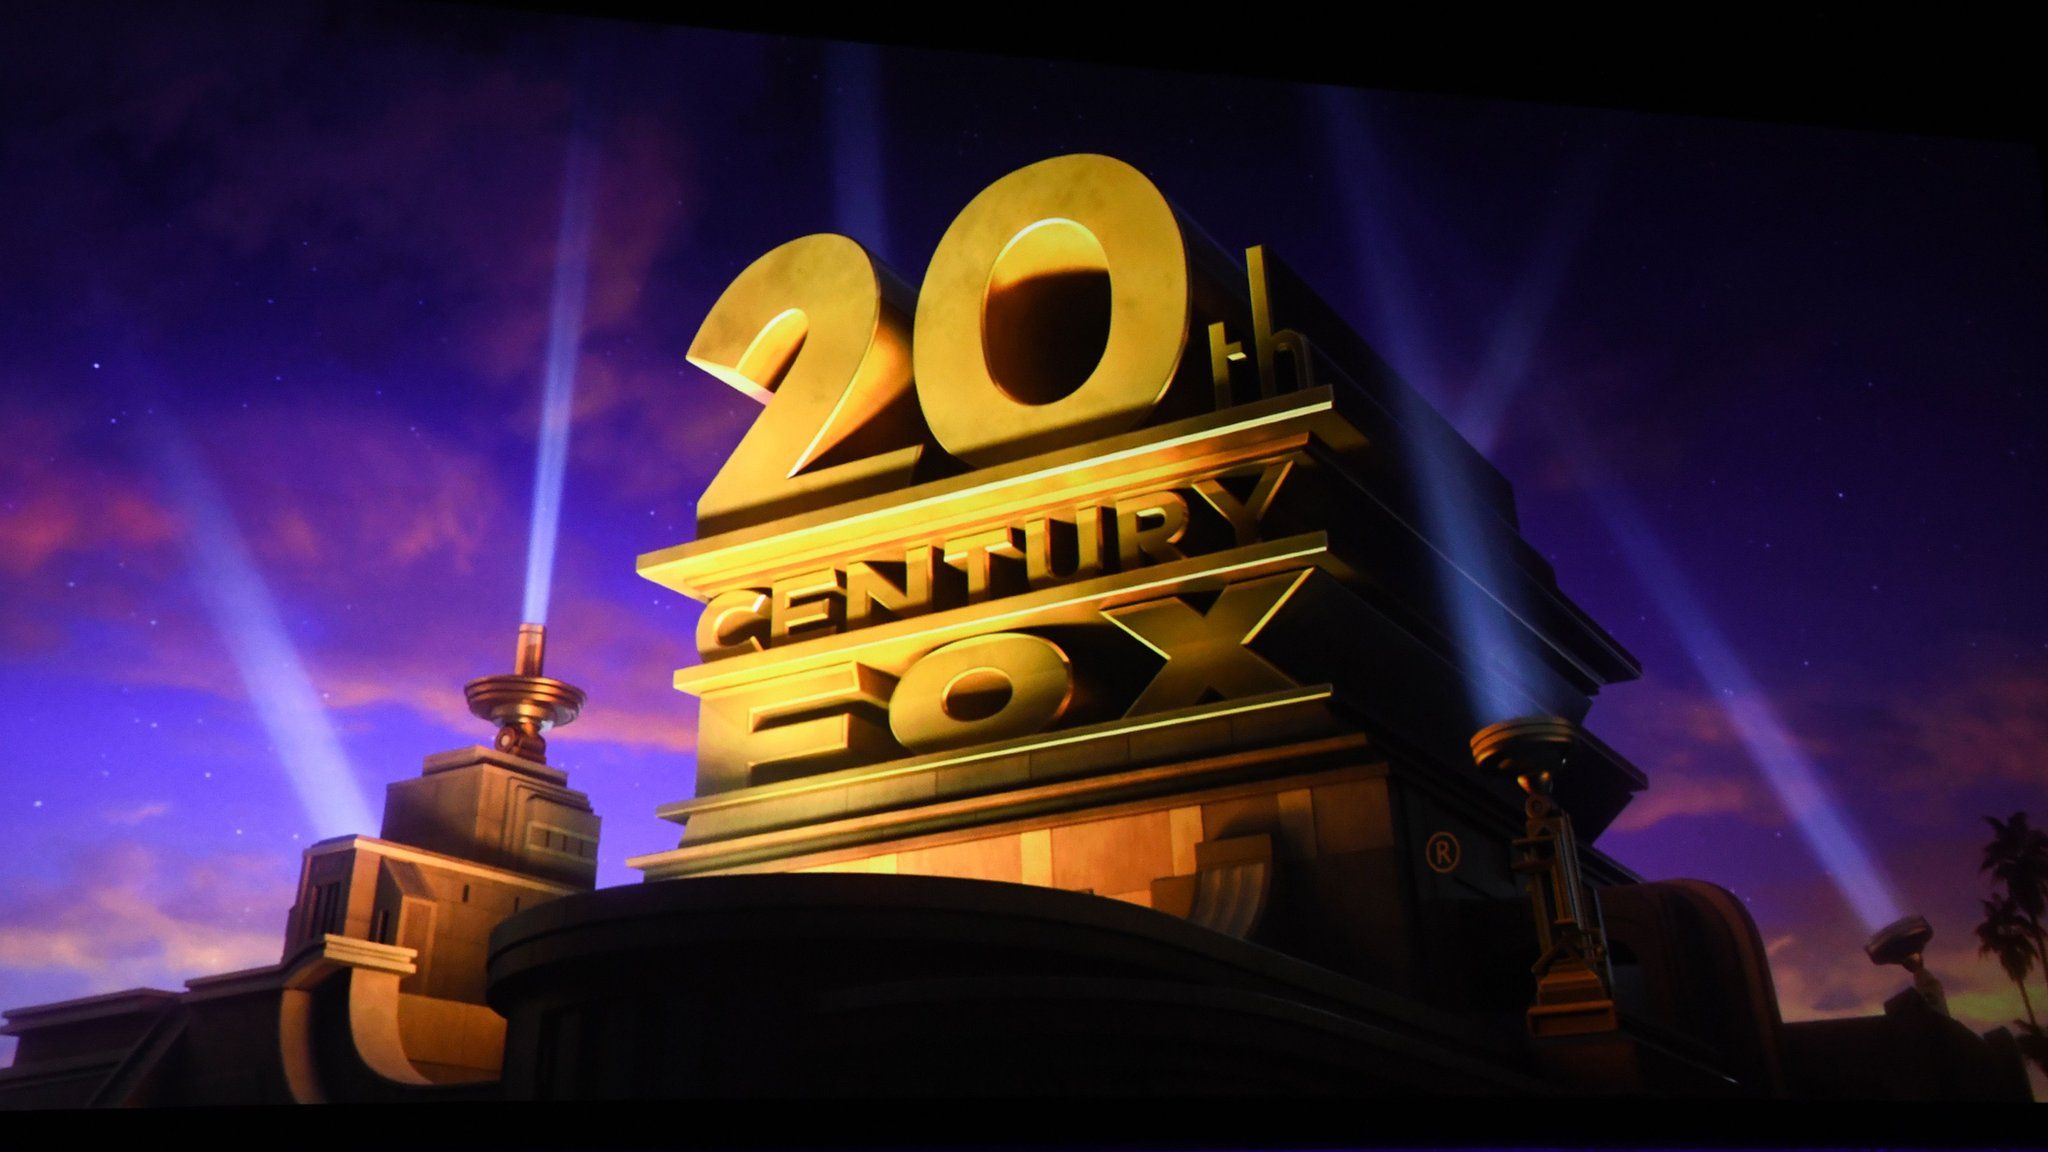 Disney ends the historic 20th Century Fox brand